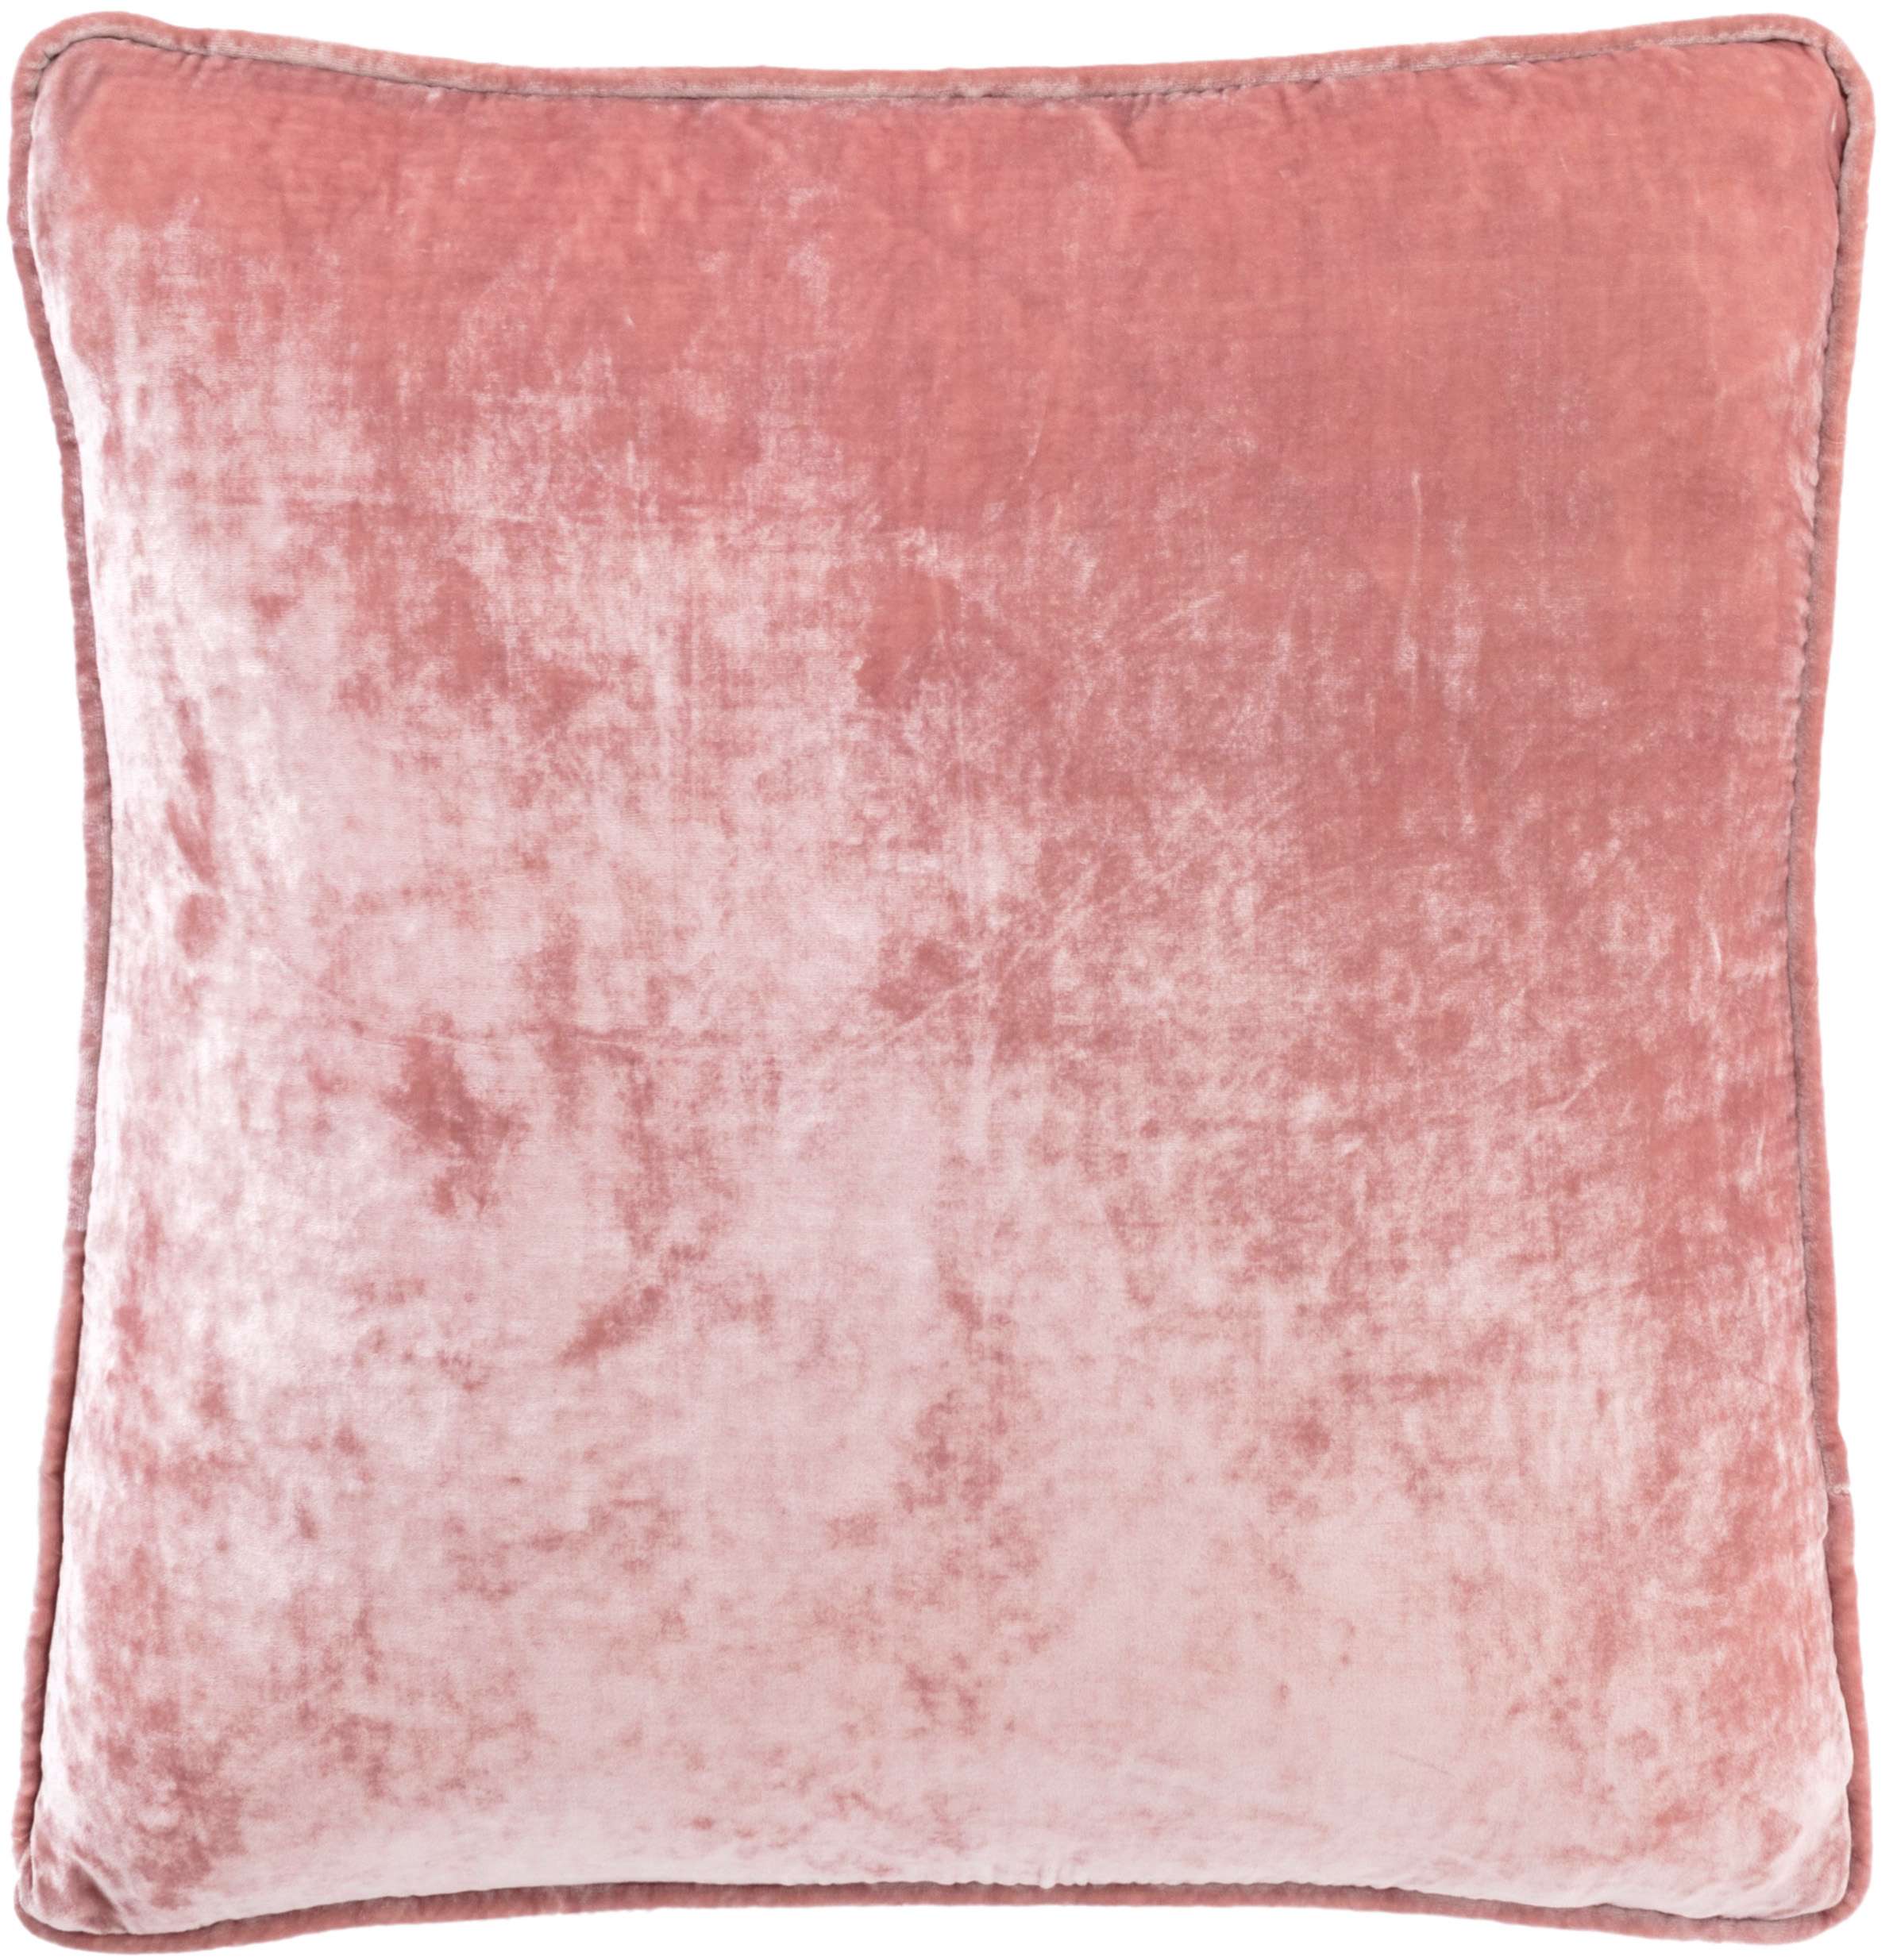 blush decorative pillows